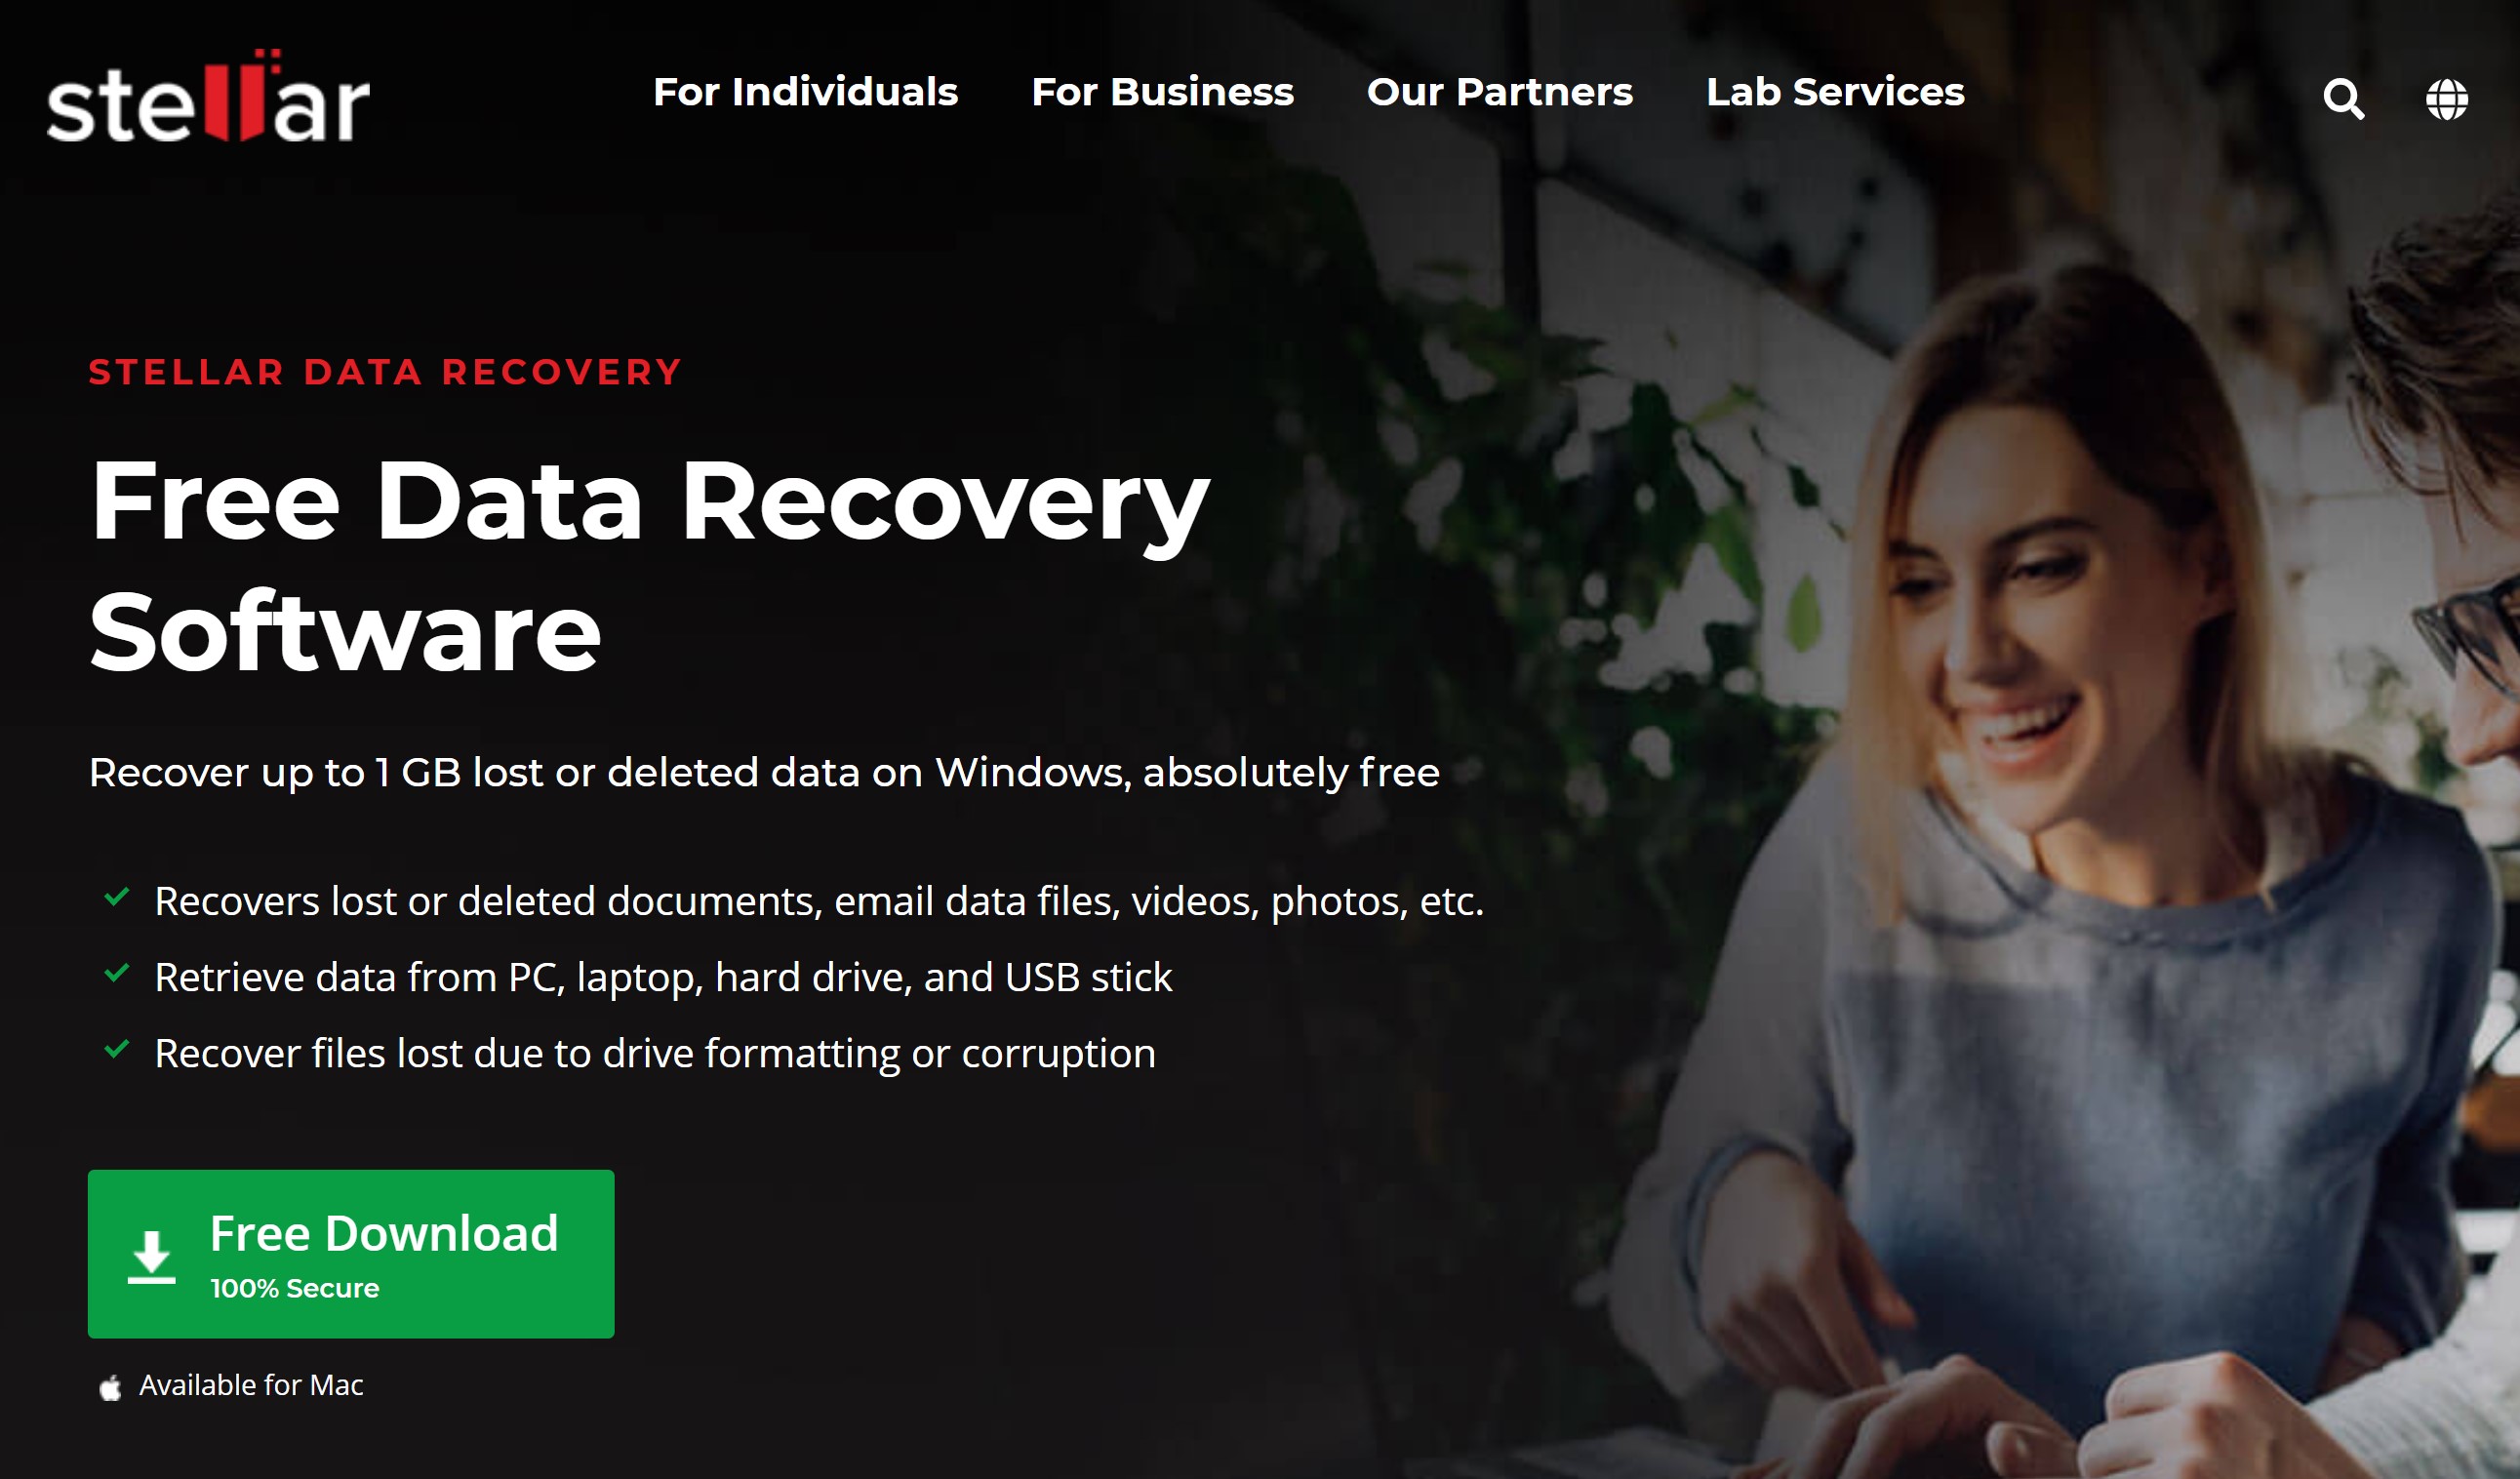 stellar data recovery free trial